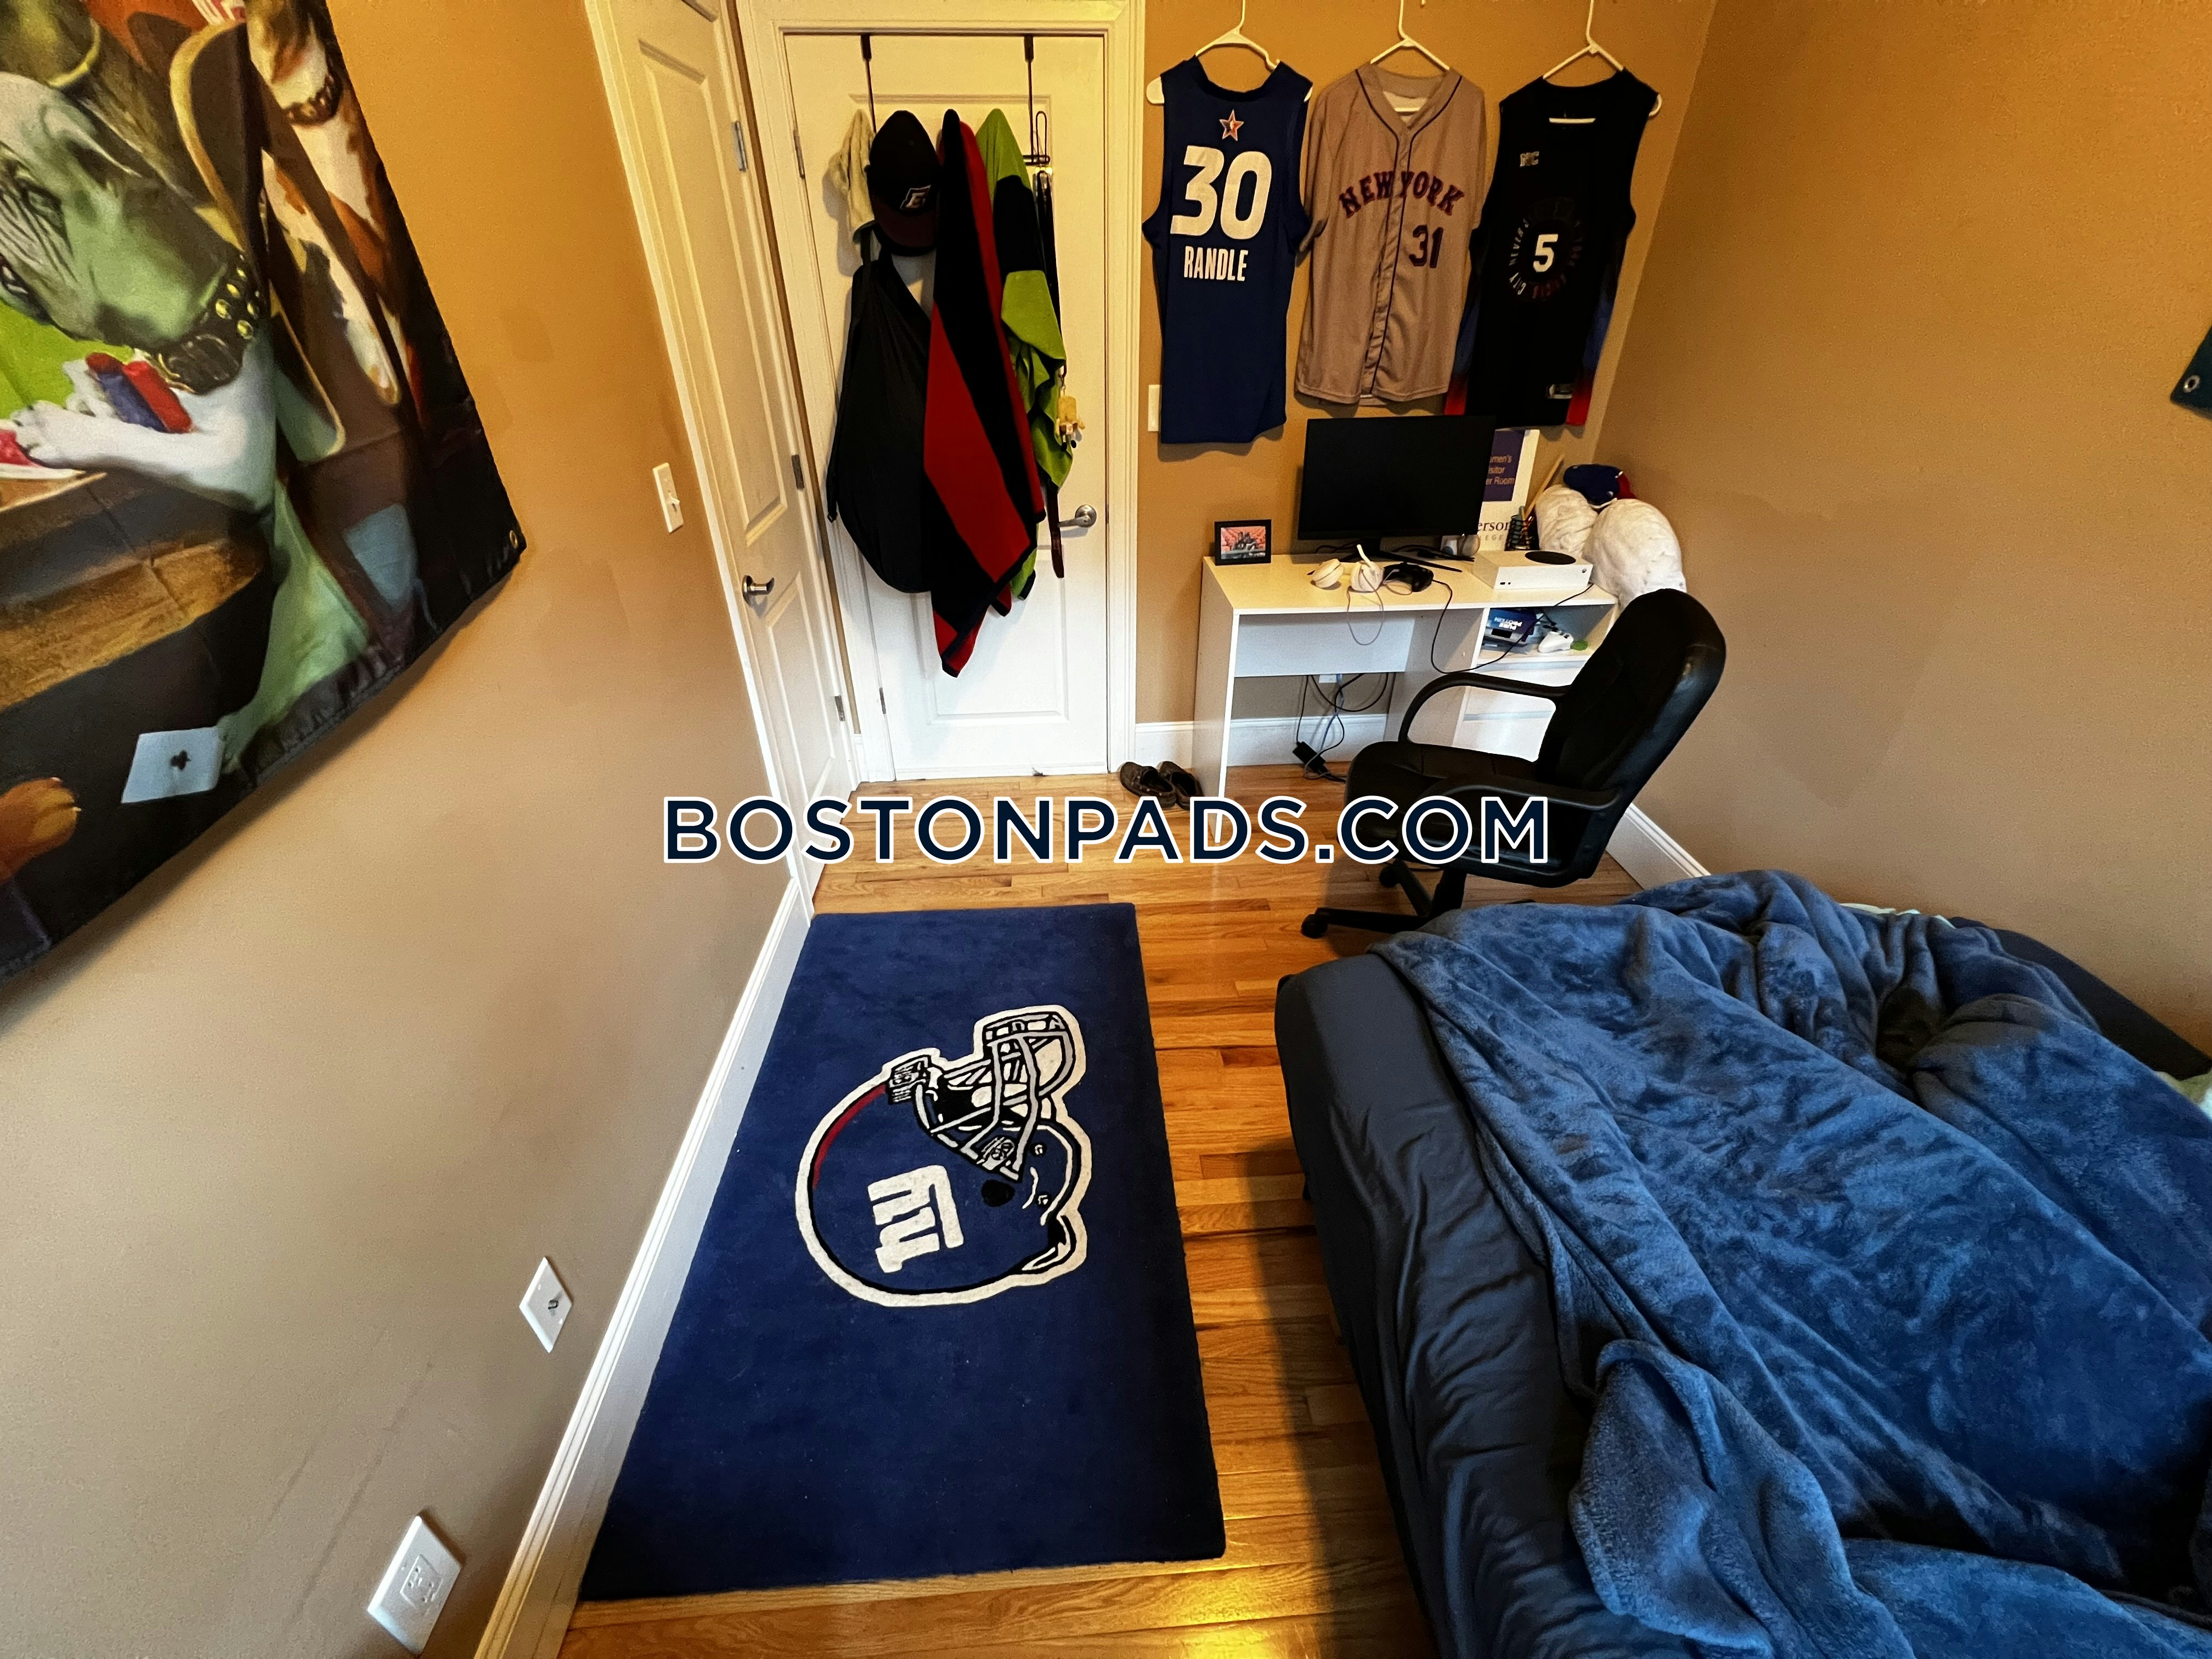 Boston - $5,800